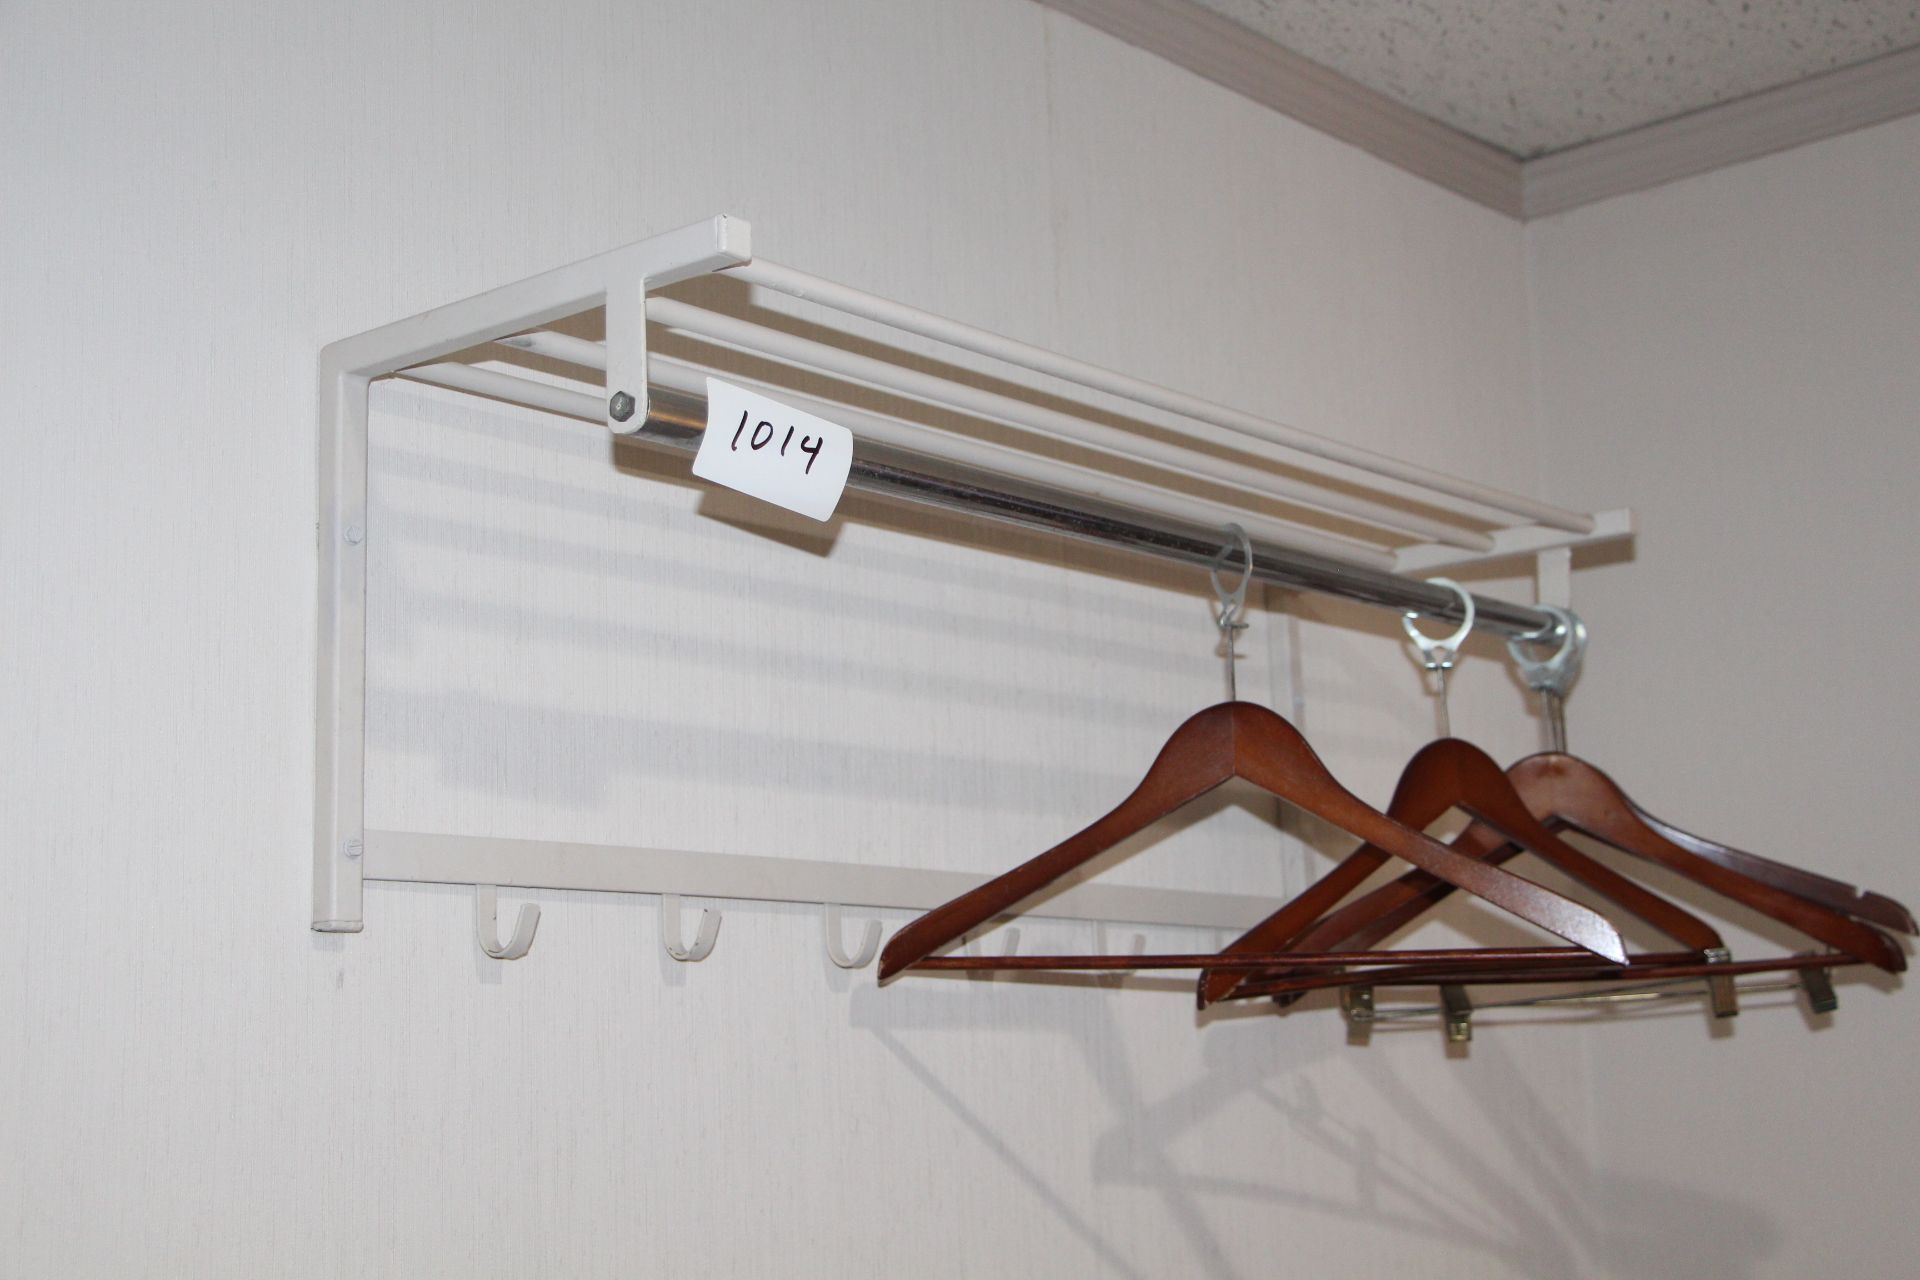 Metal wall hanging cloth rack w/ hangers (Room 119)